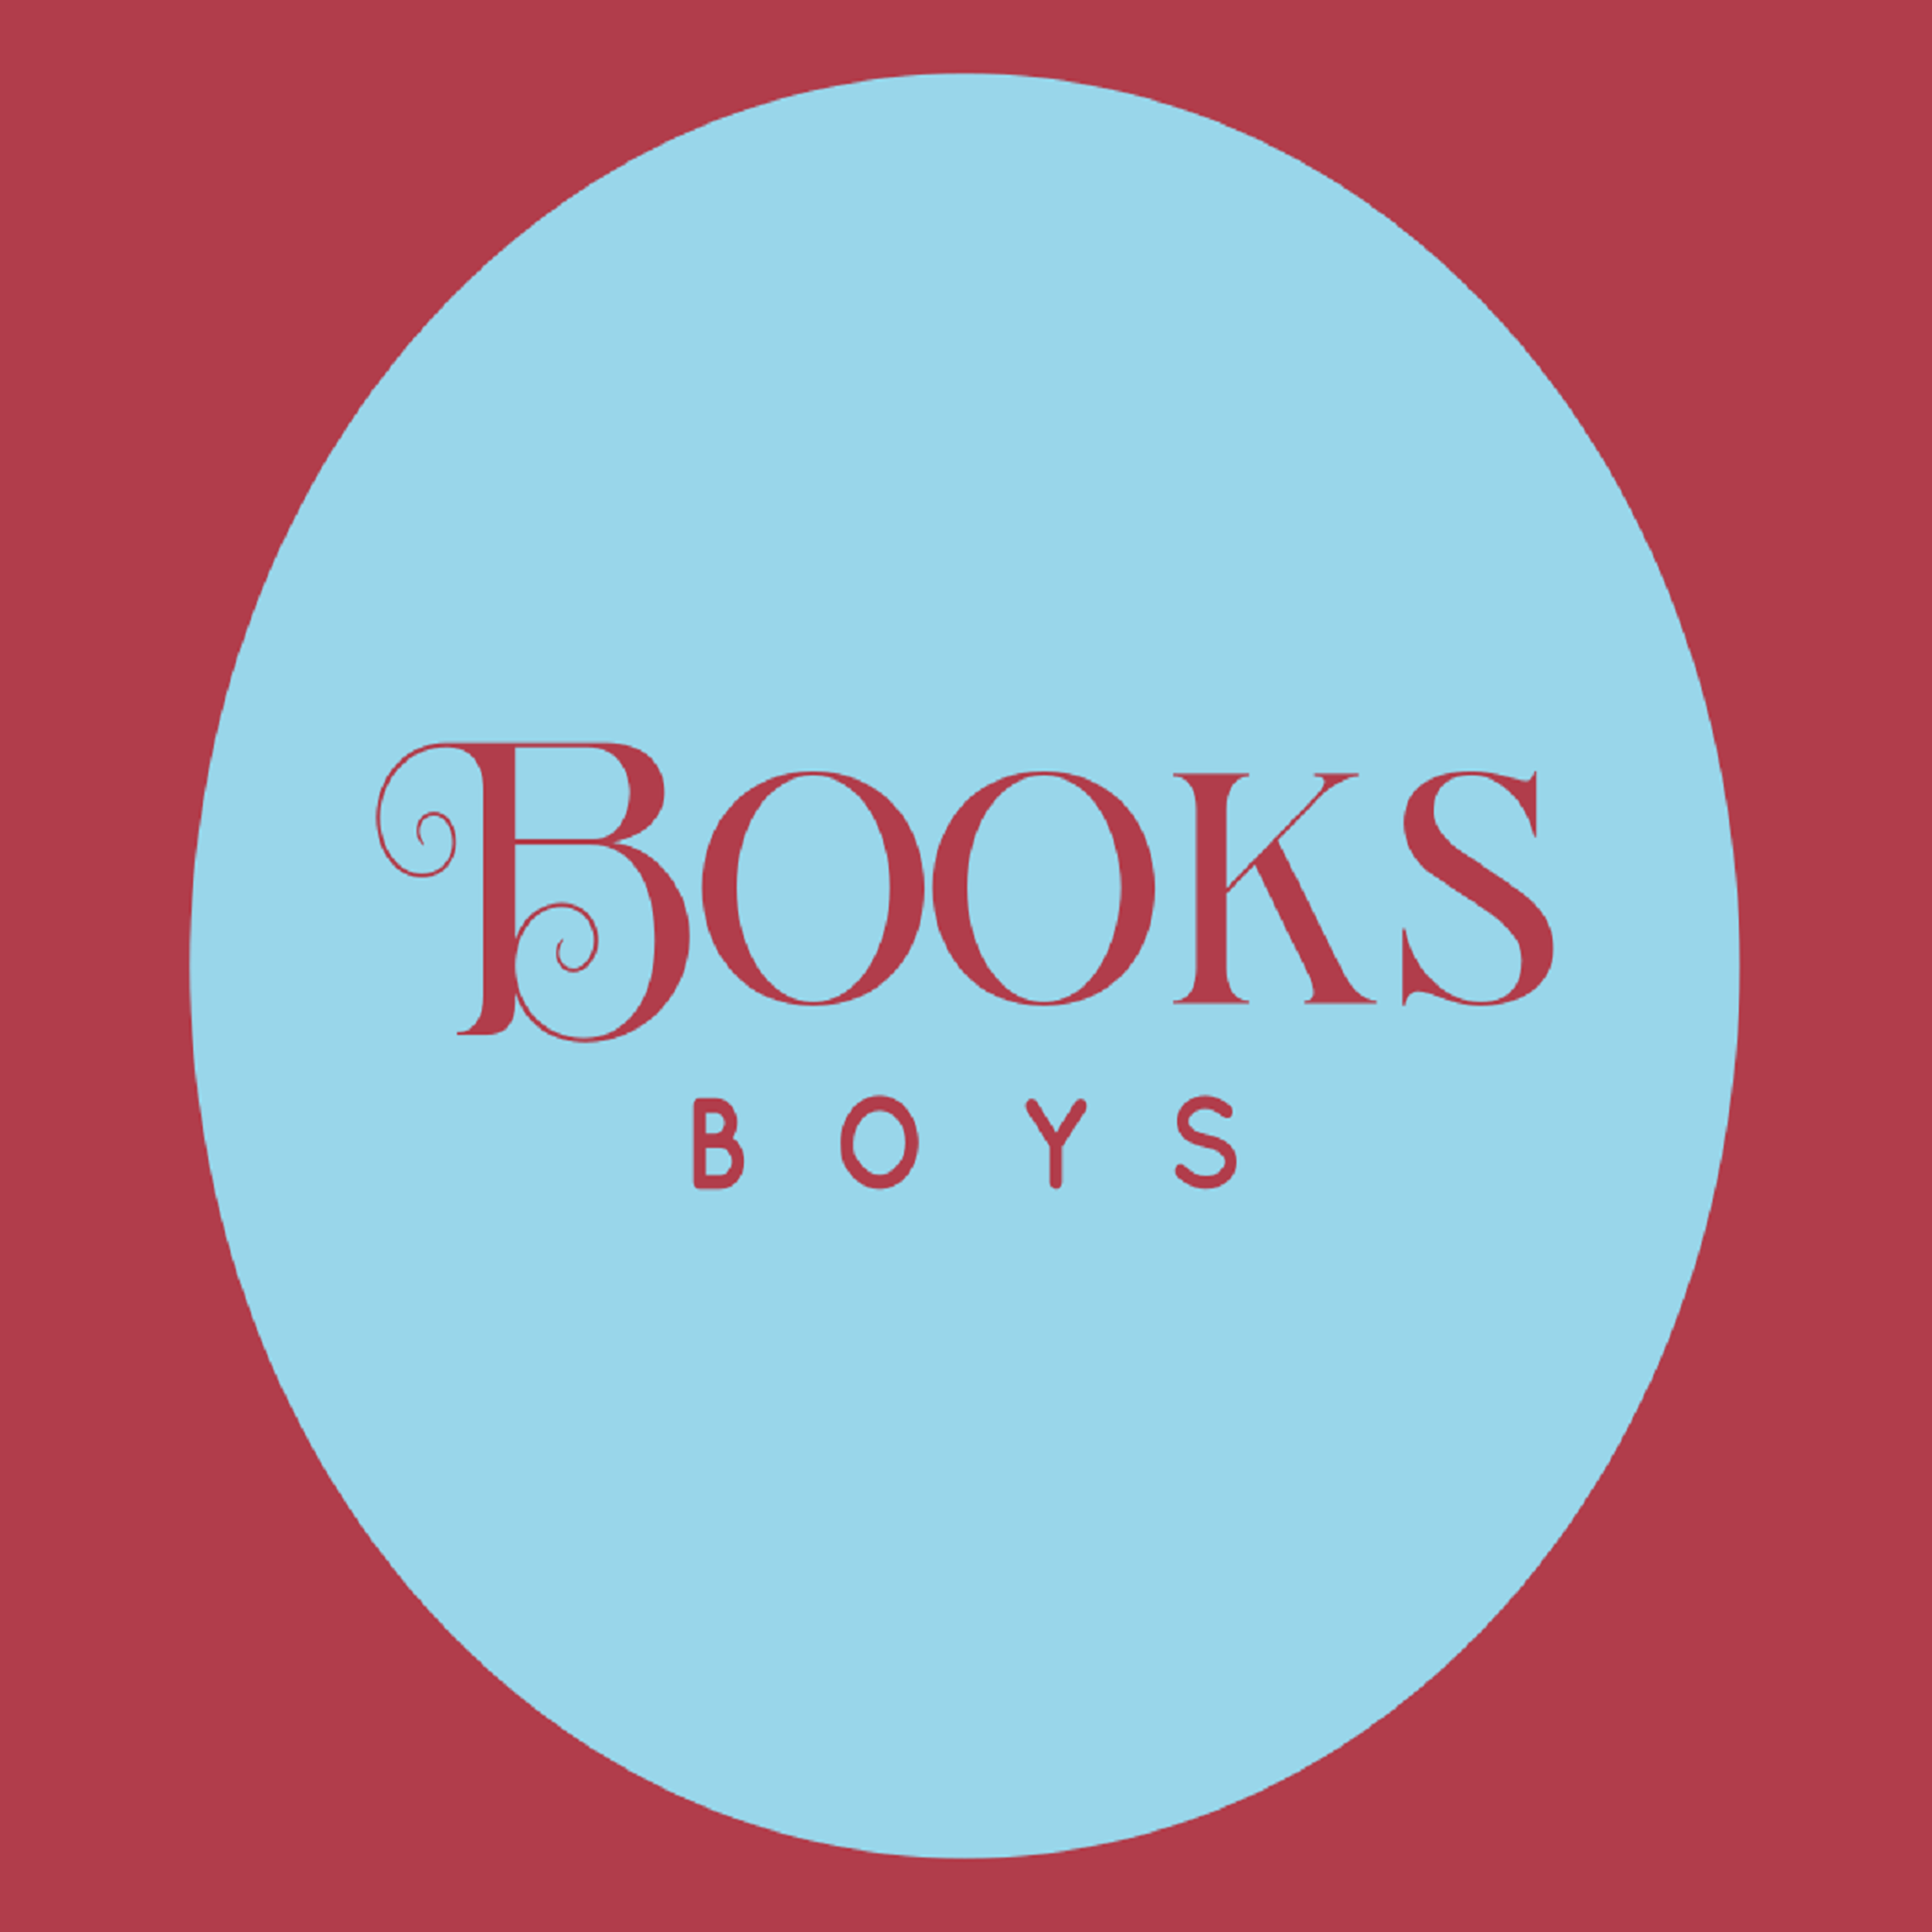 Books Boys - Episode 10 (part 2)